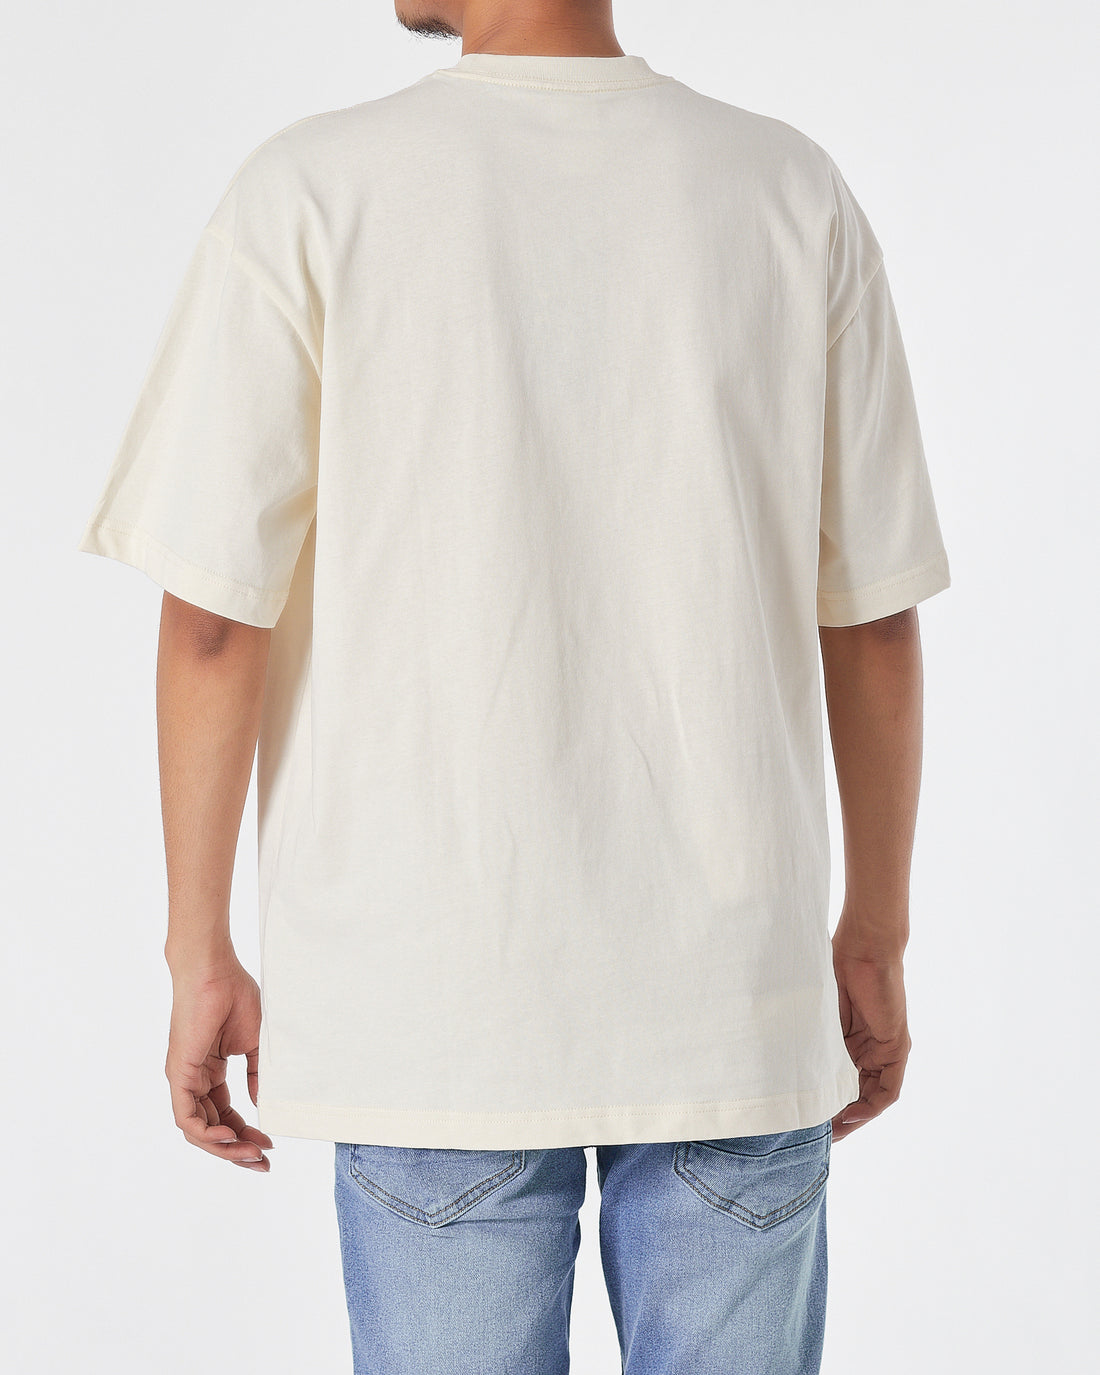 NIK Logo Embroidered Men Cream T-Shirt 16.90